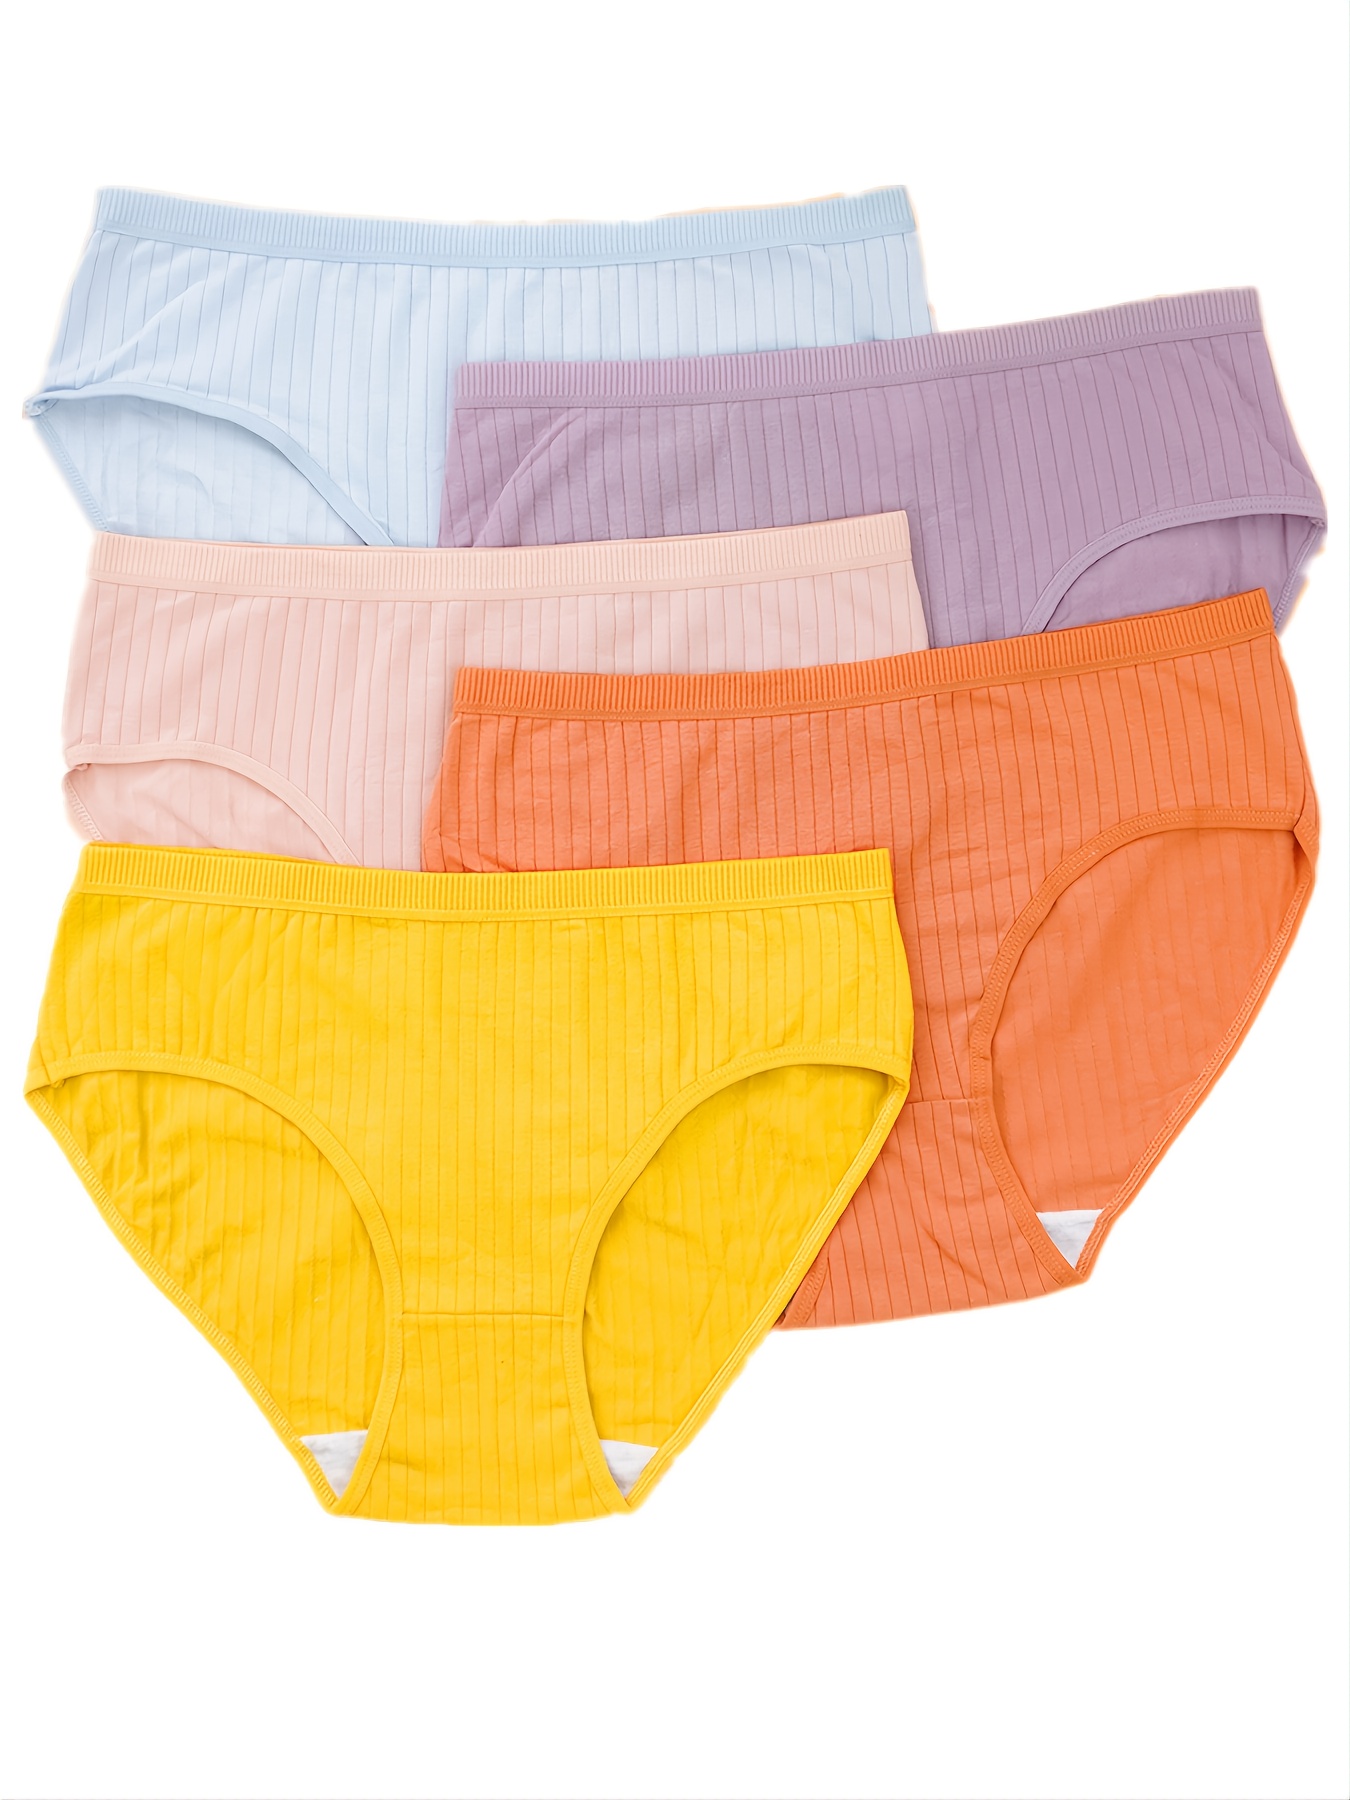  Women Cotton Panties High Waist Panty Hipster Briefs Comfortable  Undies Boy Shorts Underwear 5 Pack Medium